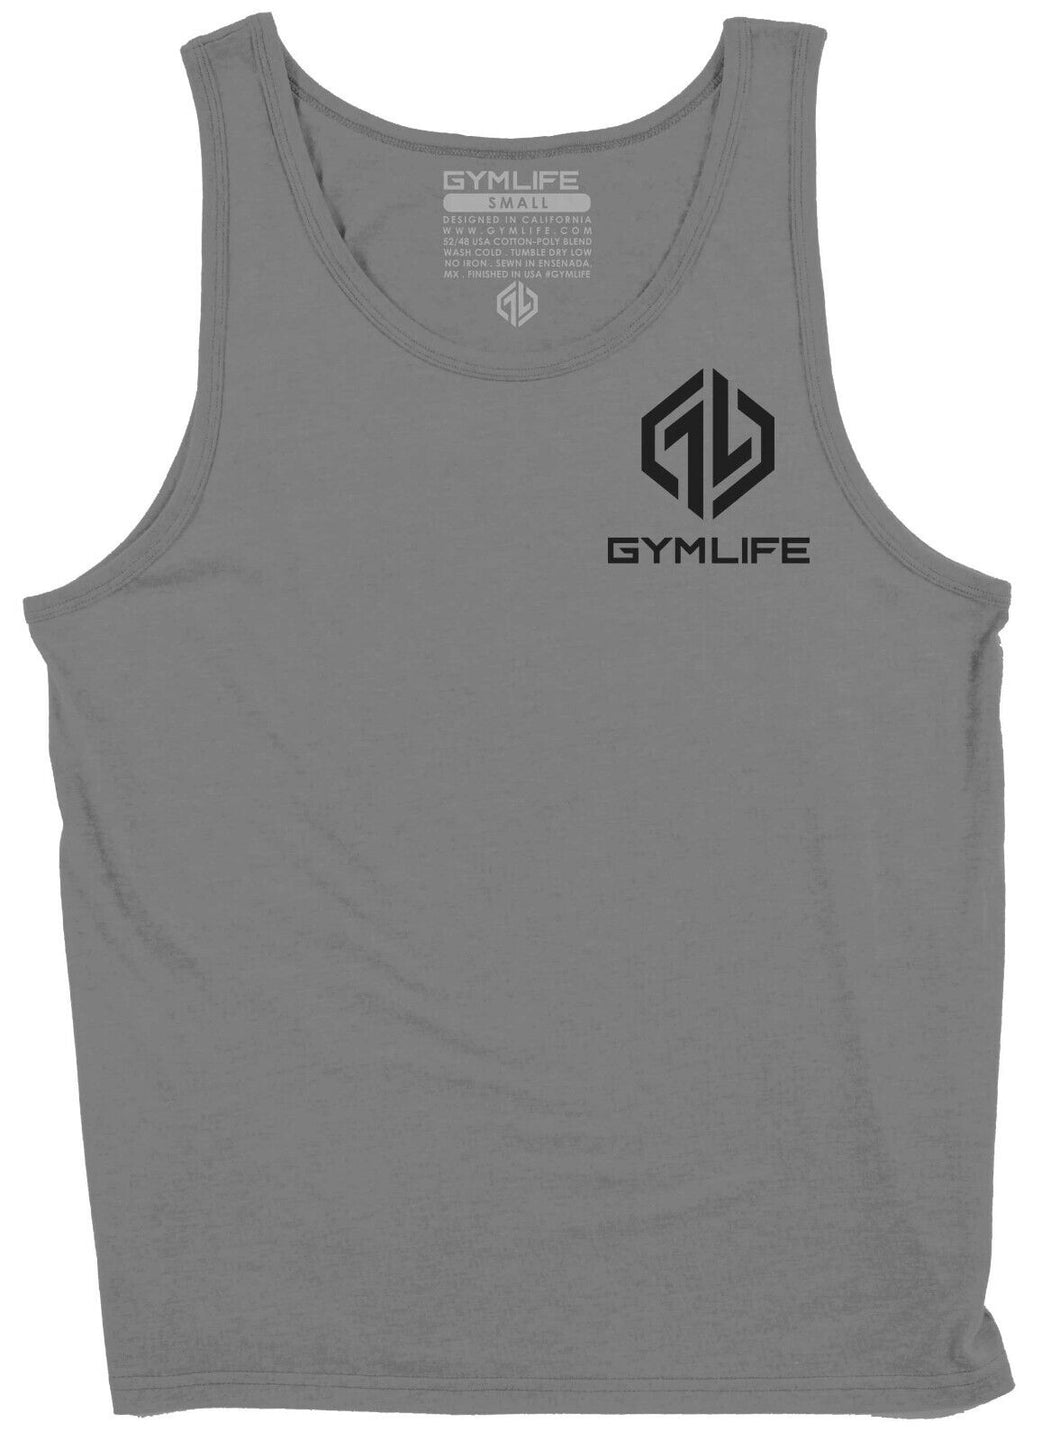 GYM LIFE - Power Up Icon - Mens Athletic 52/48 Premium Tank Top, Slate Gray